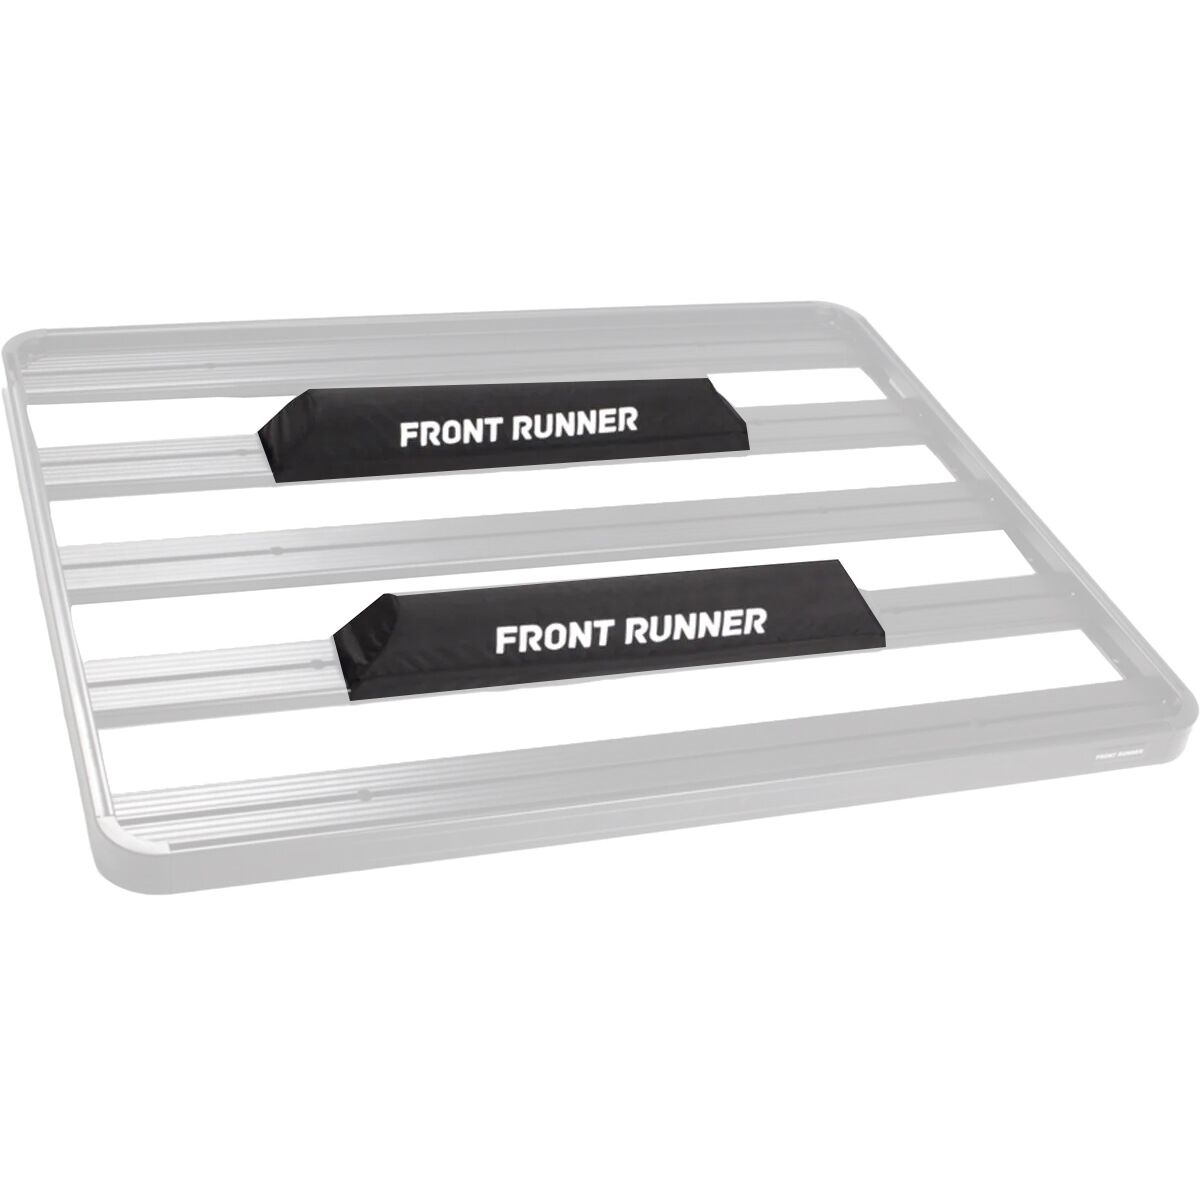 FrontRunner Rack Pad Set